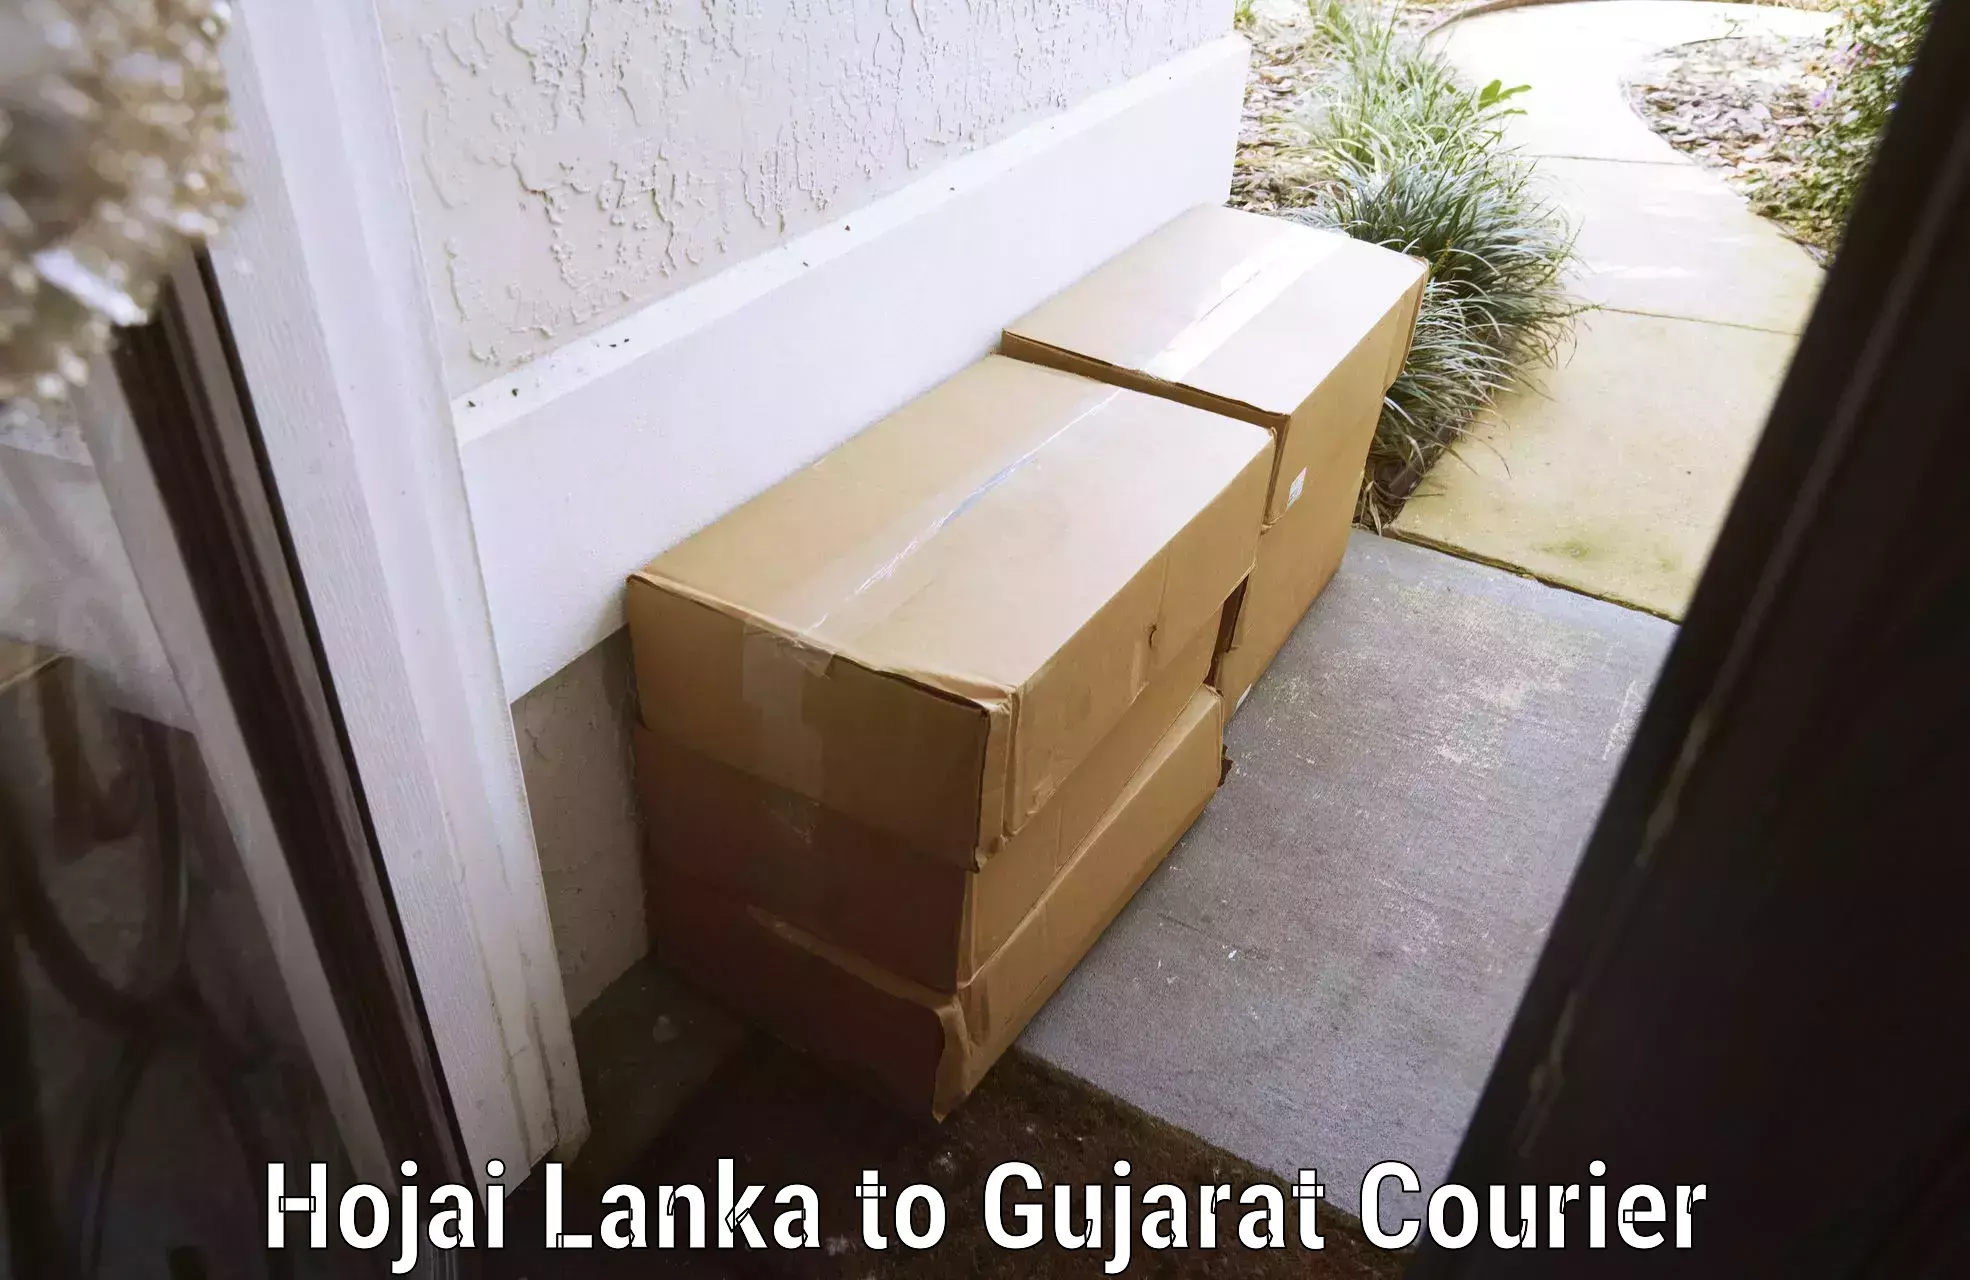 Baggage relocation service Hojai Lanka to Gujarat